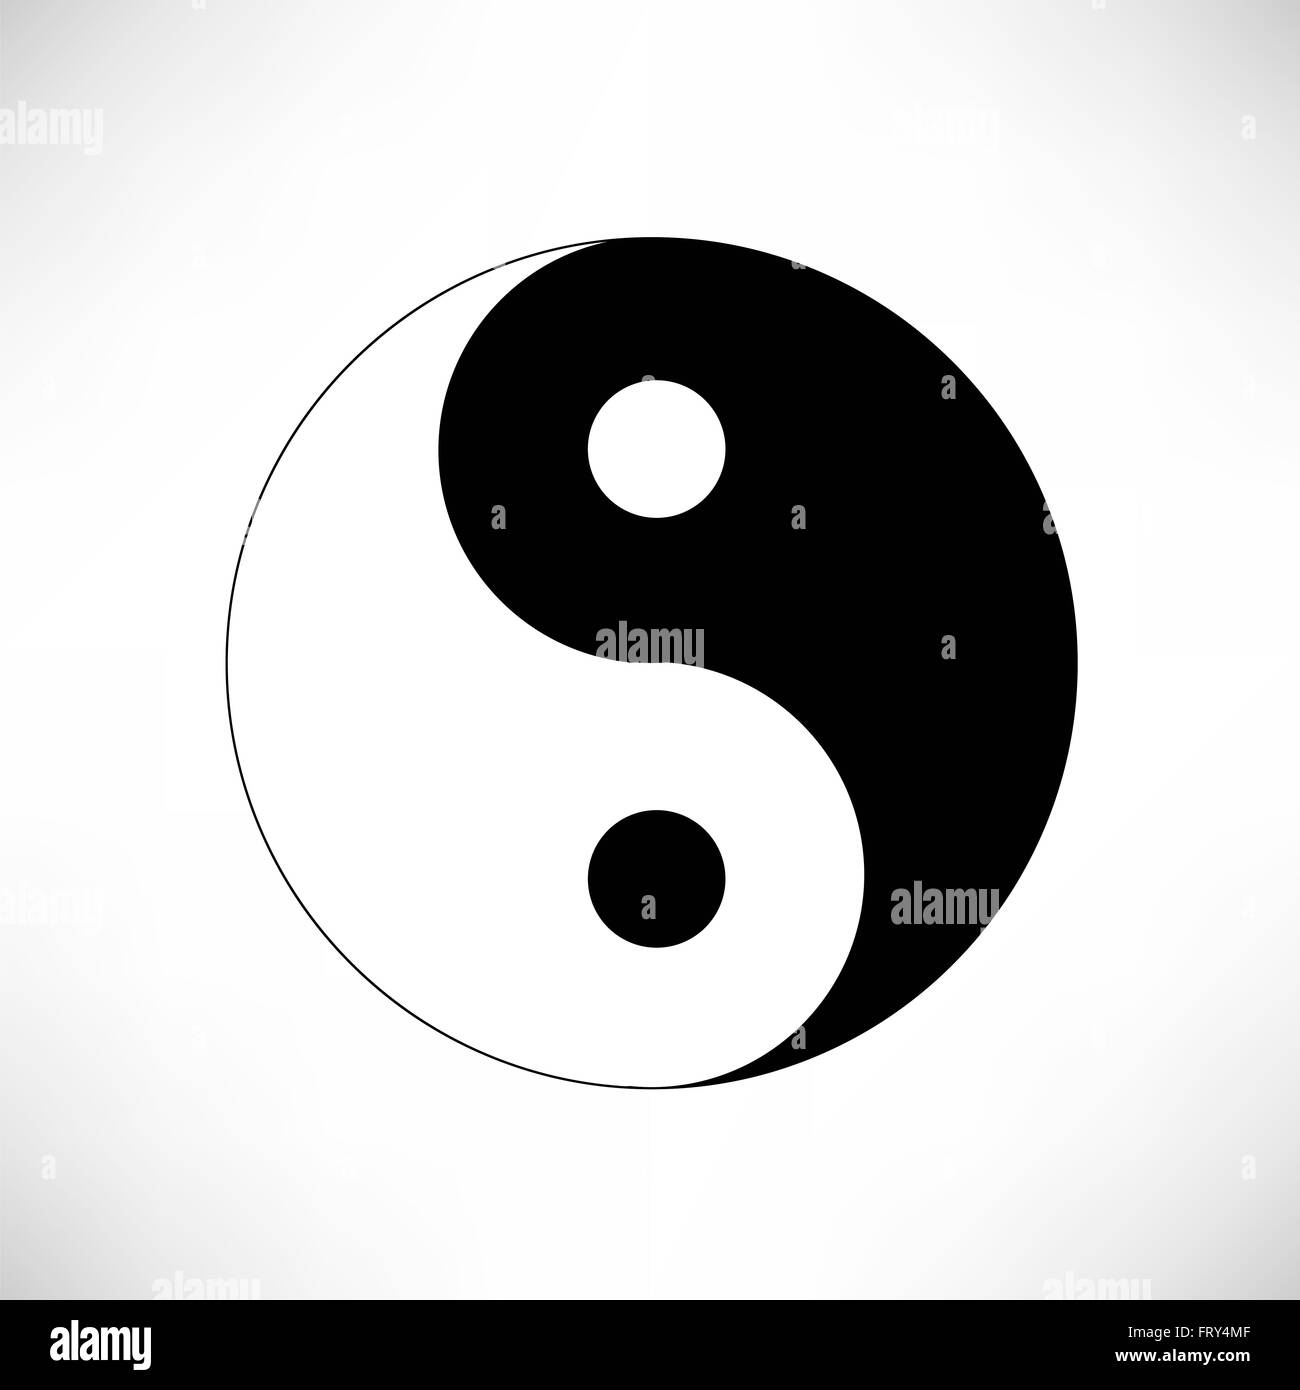 Ying yang symbol Black and White Stock Photos & Images - Alamy